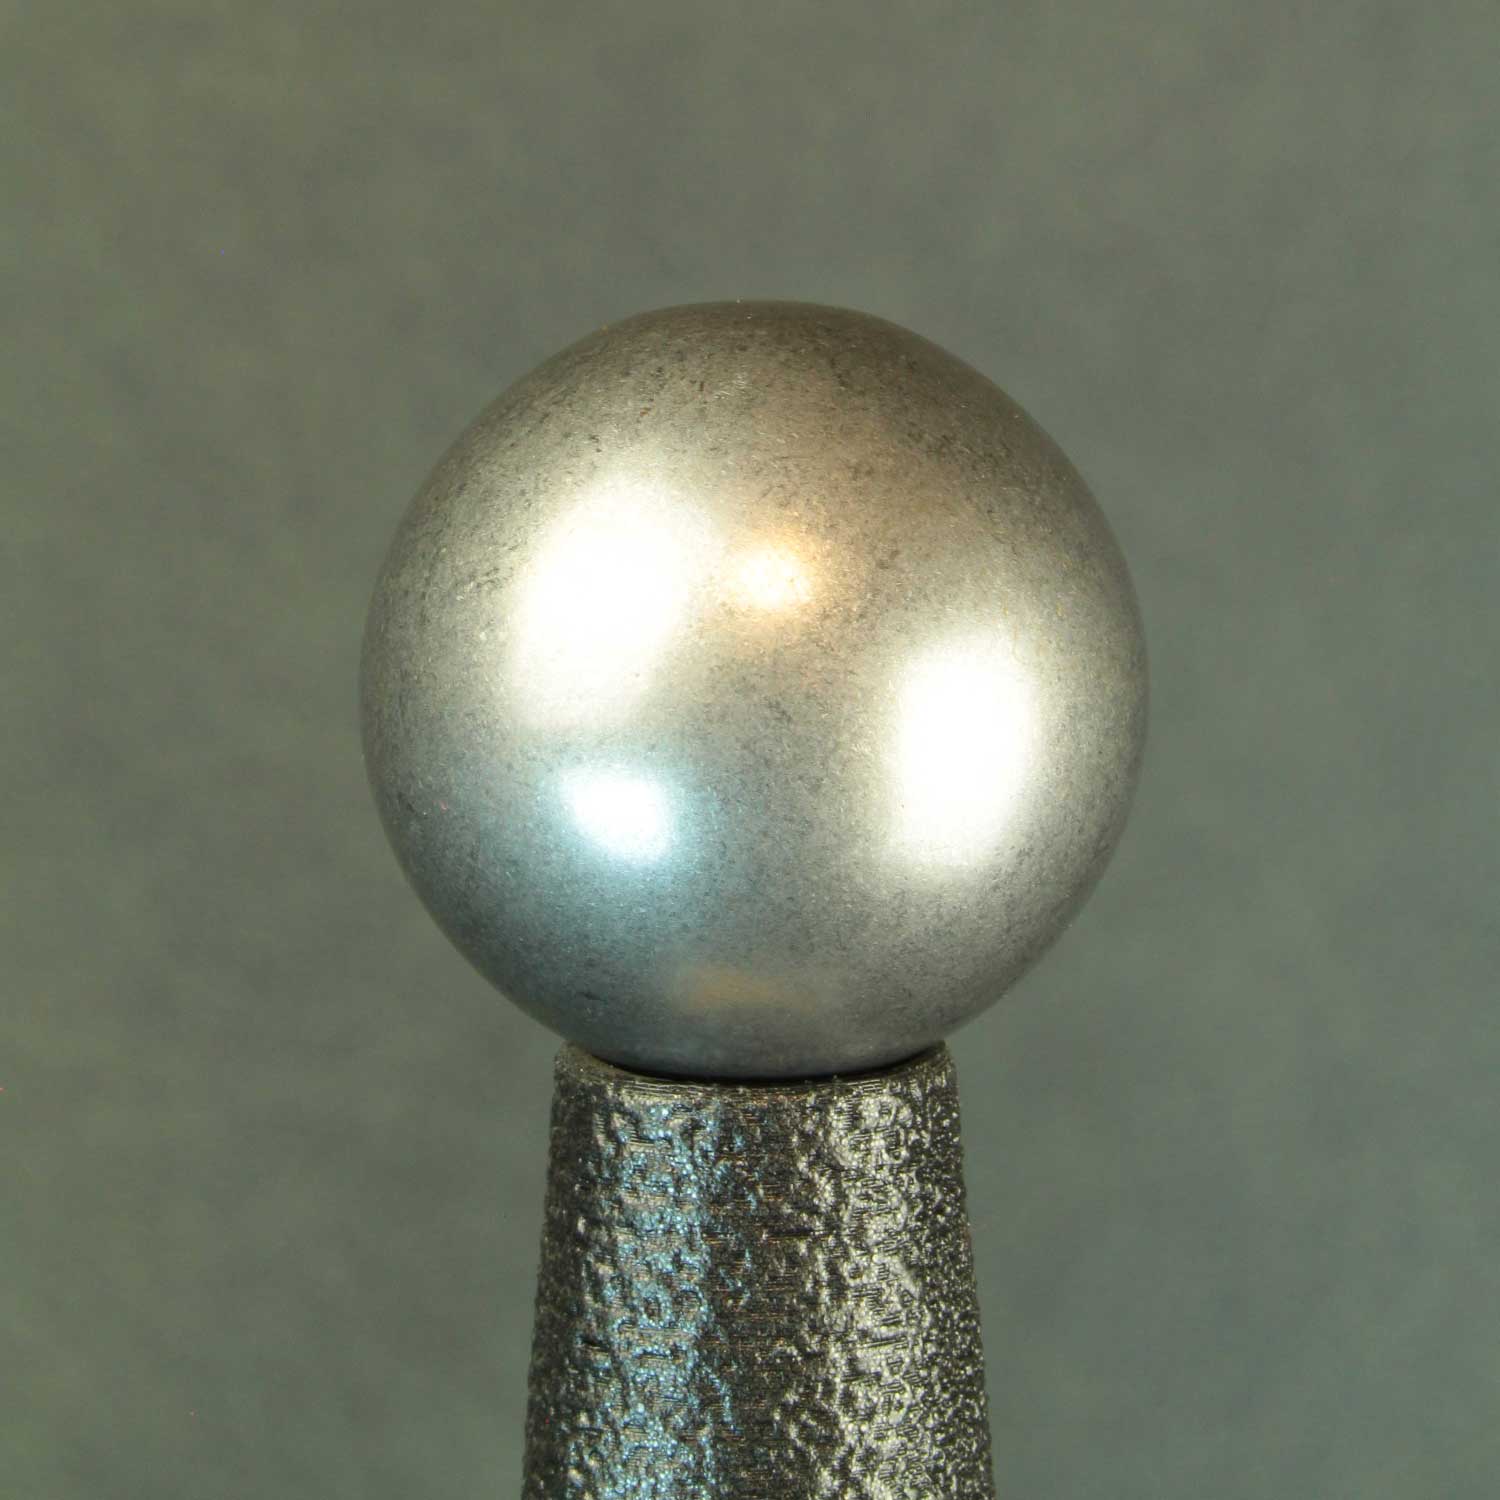 Small Ball Profile Pommel